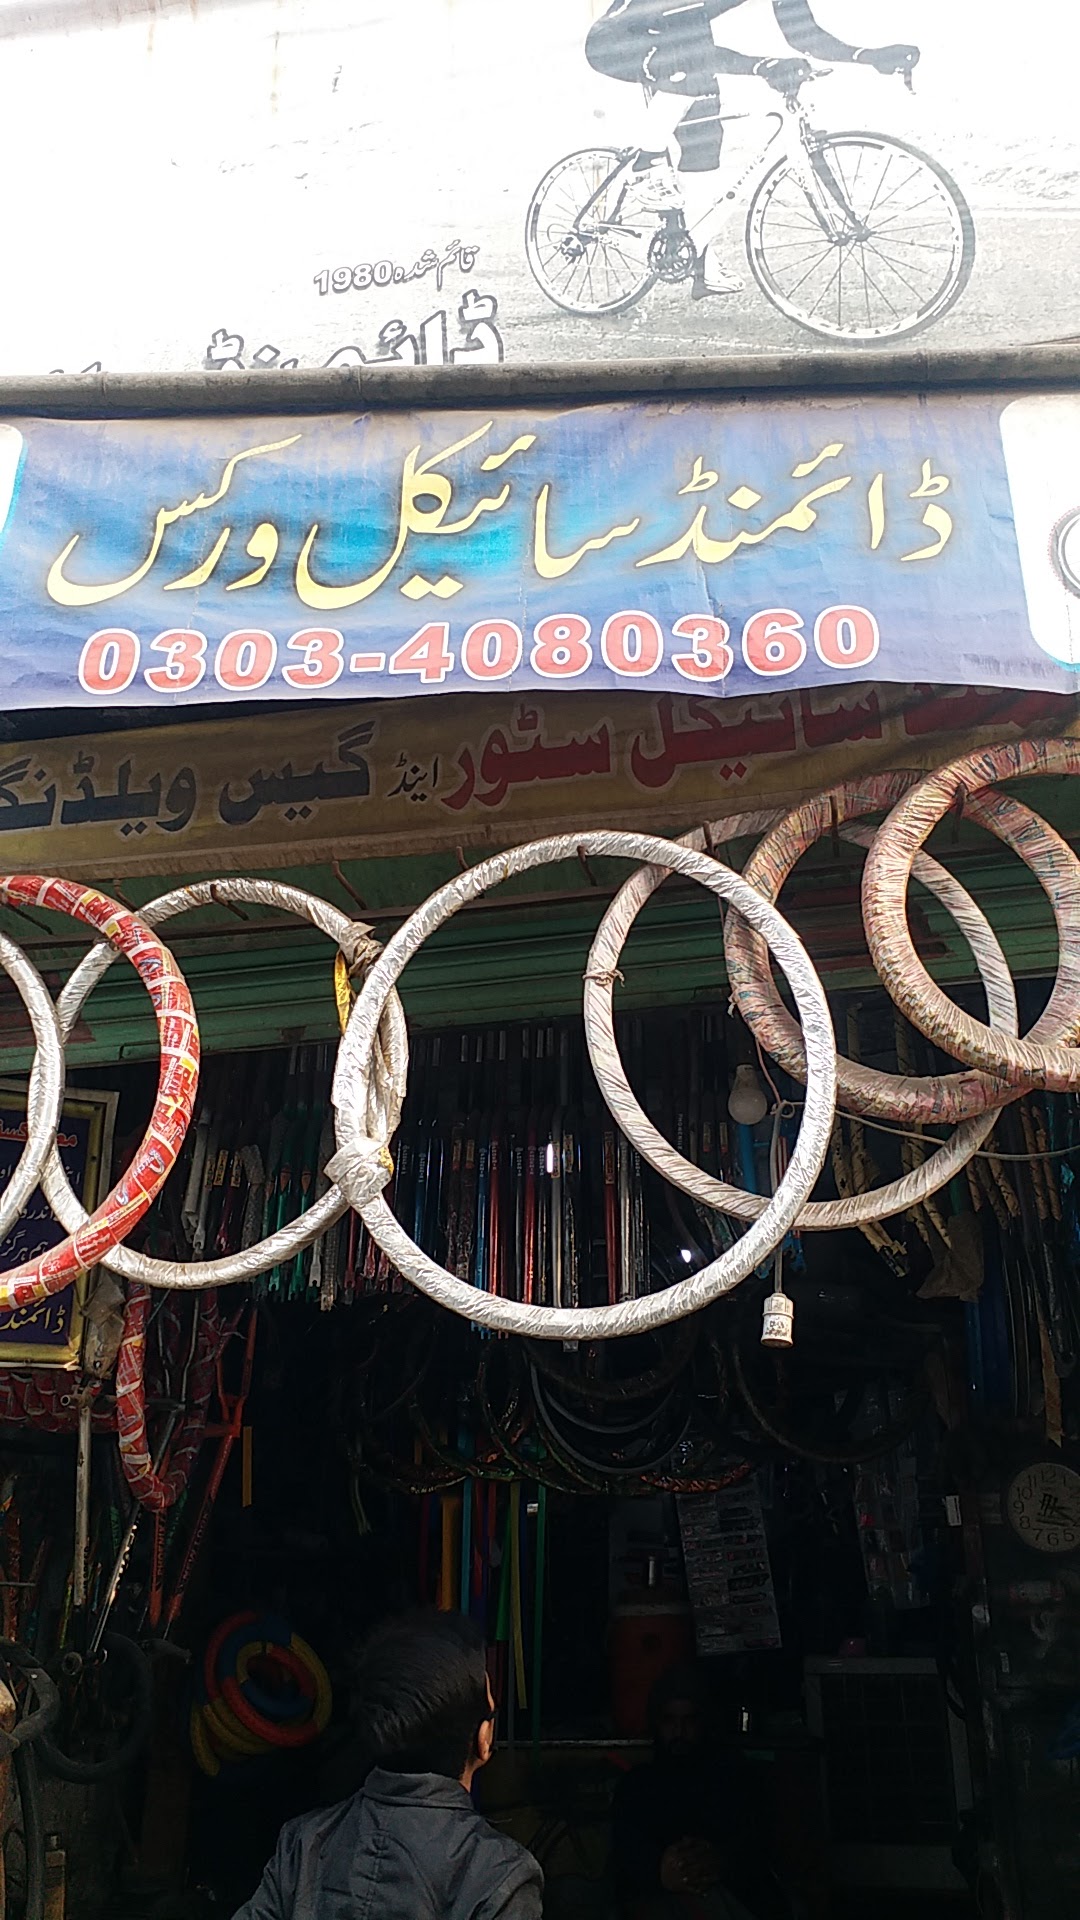 Cycle repairing shop